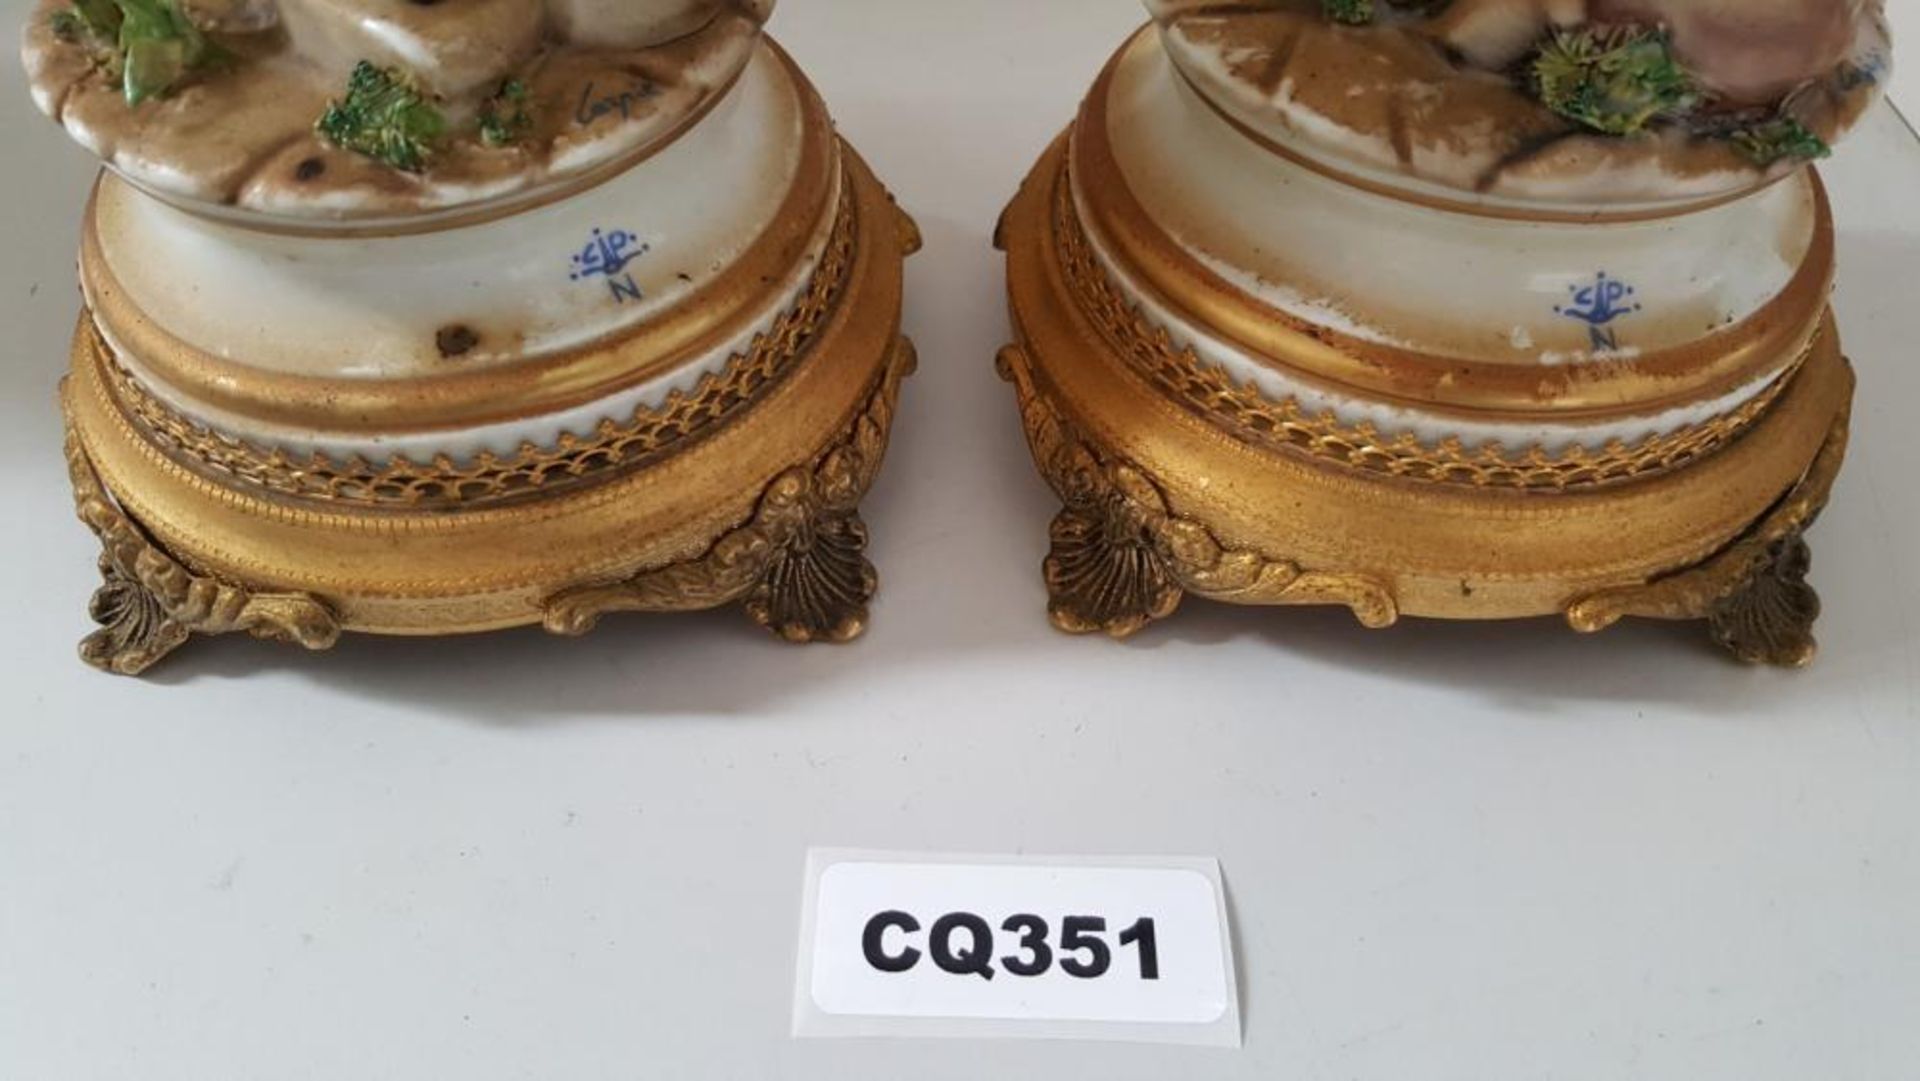 1 x A Pair Of Capodimonte Porcelain Figurines Of A Man & Women - Ref CQ351 E - Dimensions:H27/L11cm - Image 3 of 3